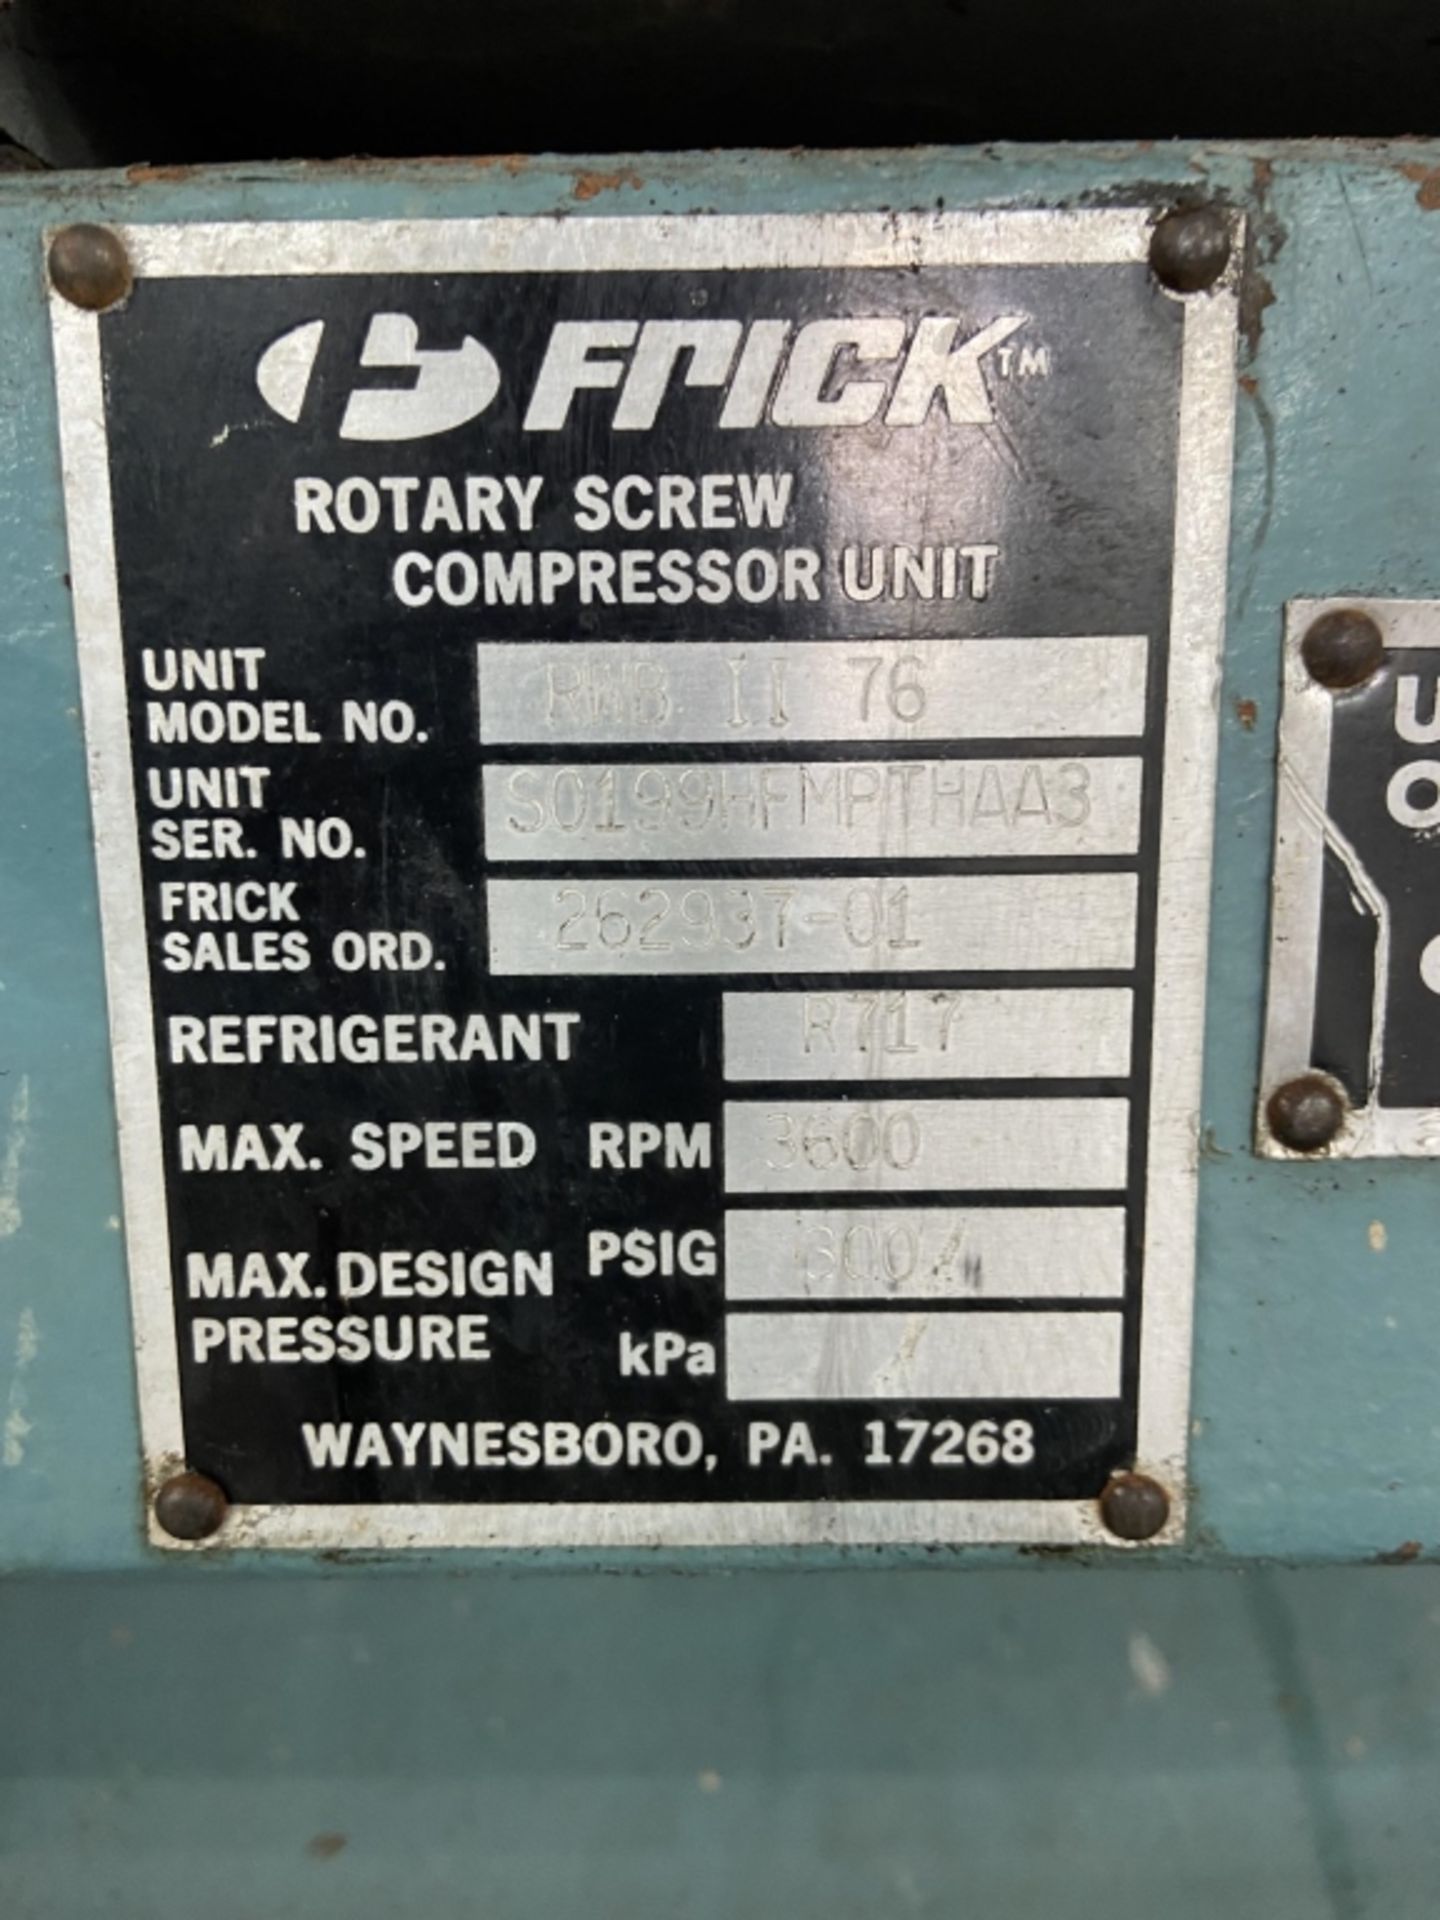 Frick 200 hp Rotary Screw Compressor,M/N RWB II 76, S/N S0199HFMPTHAA3, with Quantum HD - Image 9 of 15